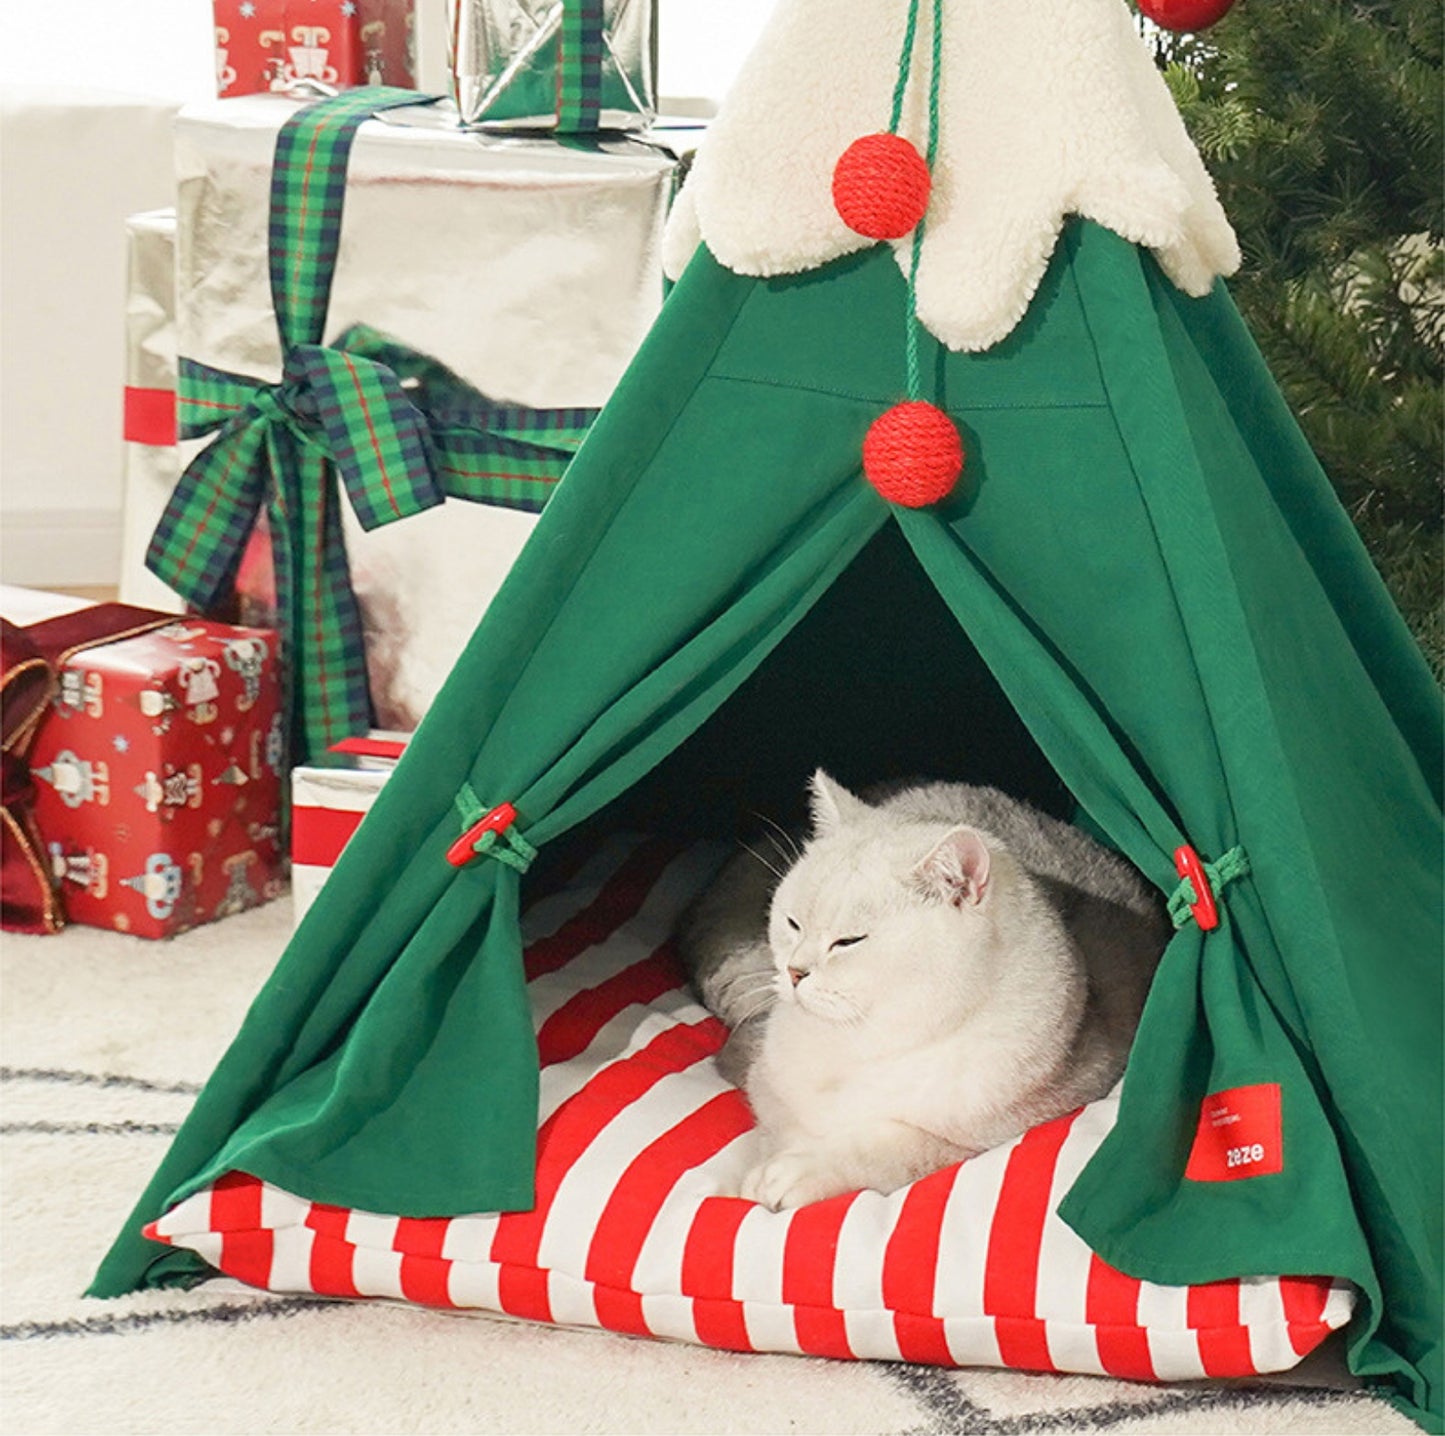 Festive Teepee: ZeZe's Christmas-Themed Pet Tent